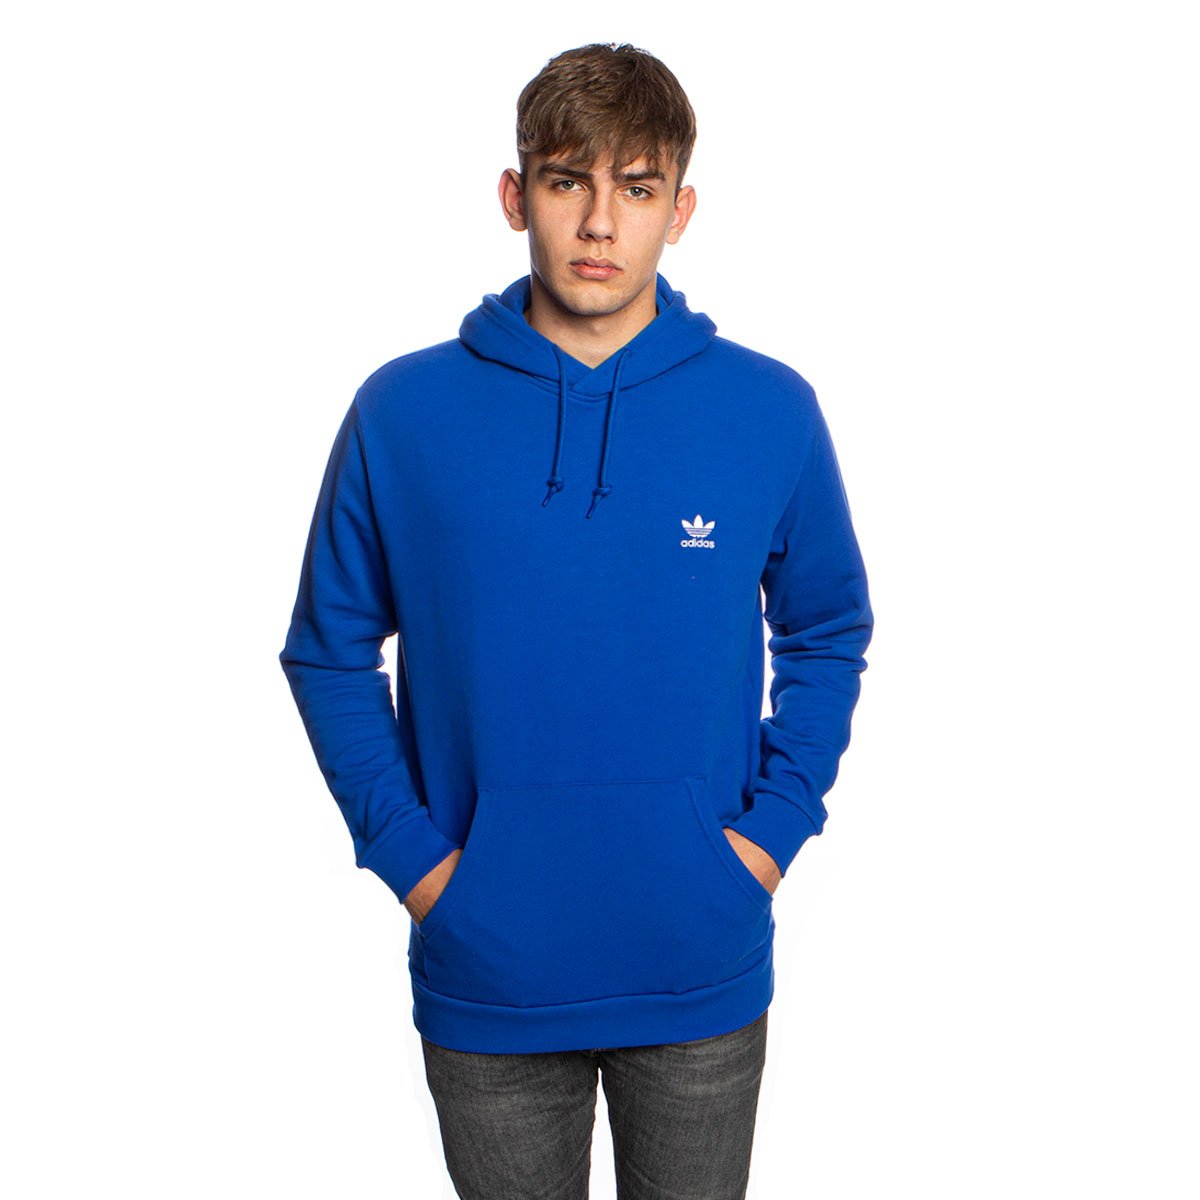 Sweatshirt Adidas Originals Essential Hoody royal blue | Bludshop.com